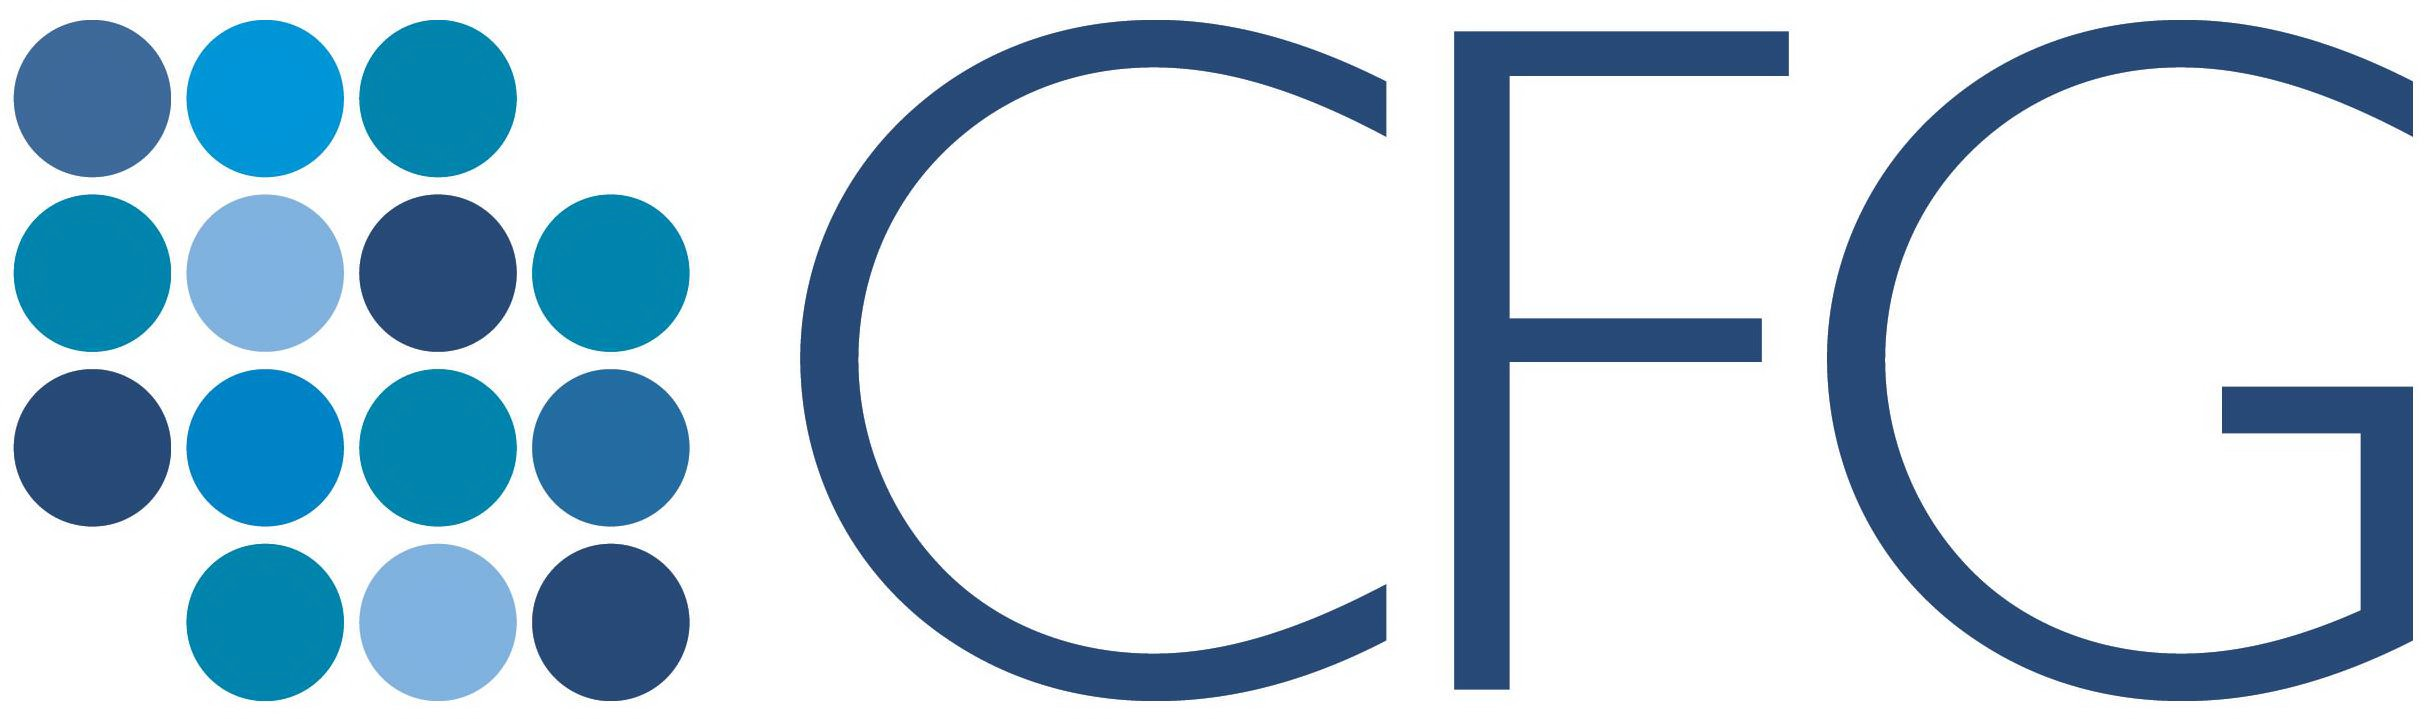 Trademark Logo CFG